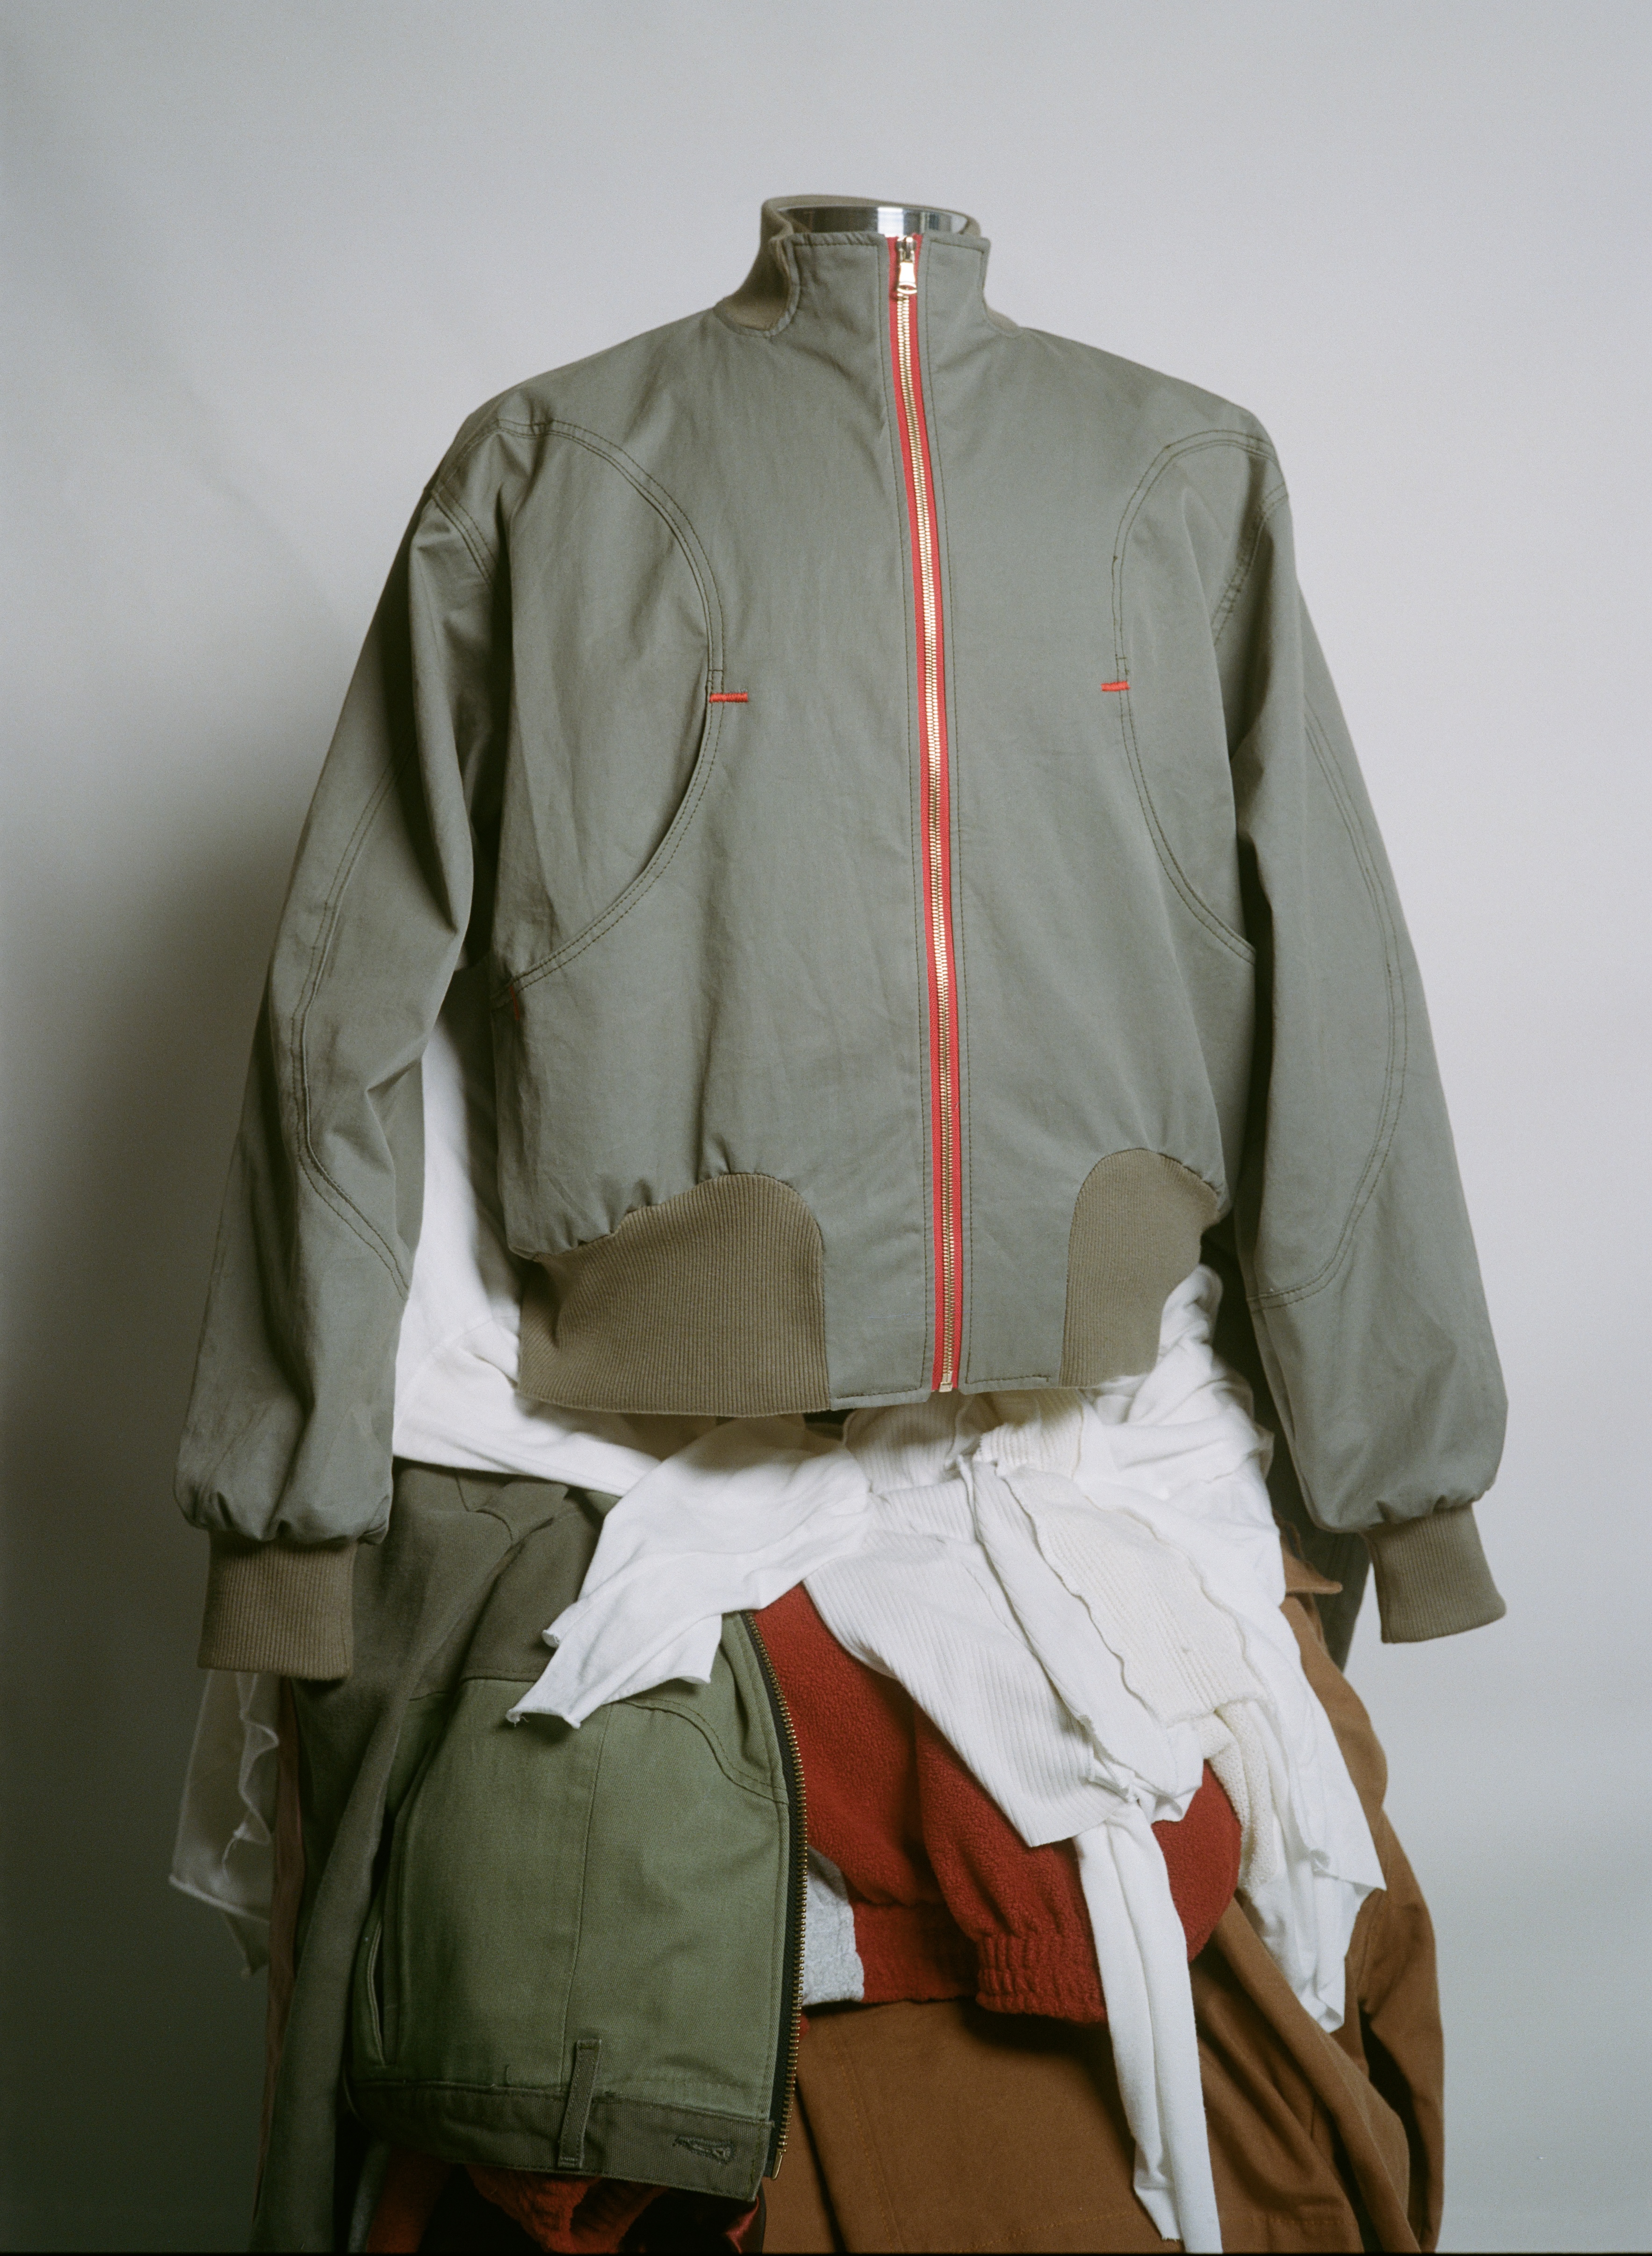 original design jacket by FIDM Grad and fashion designer Alexander Novak